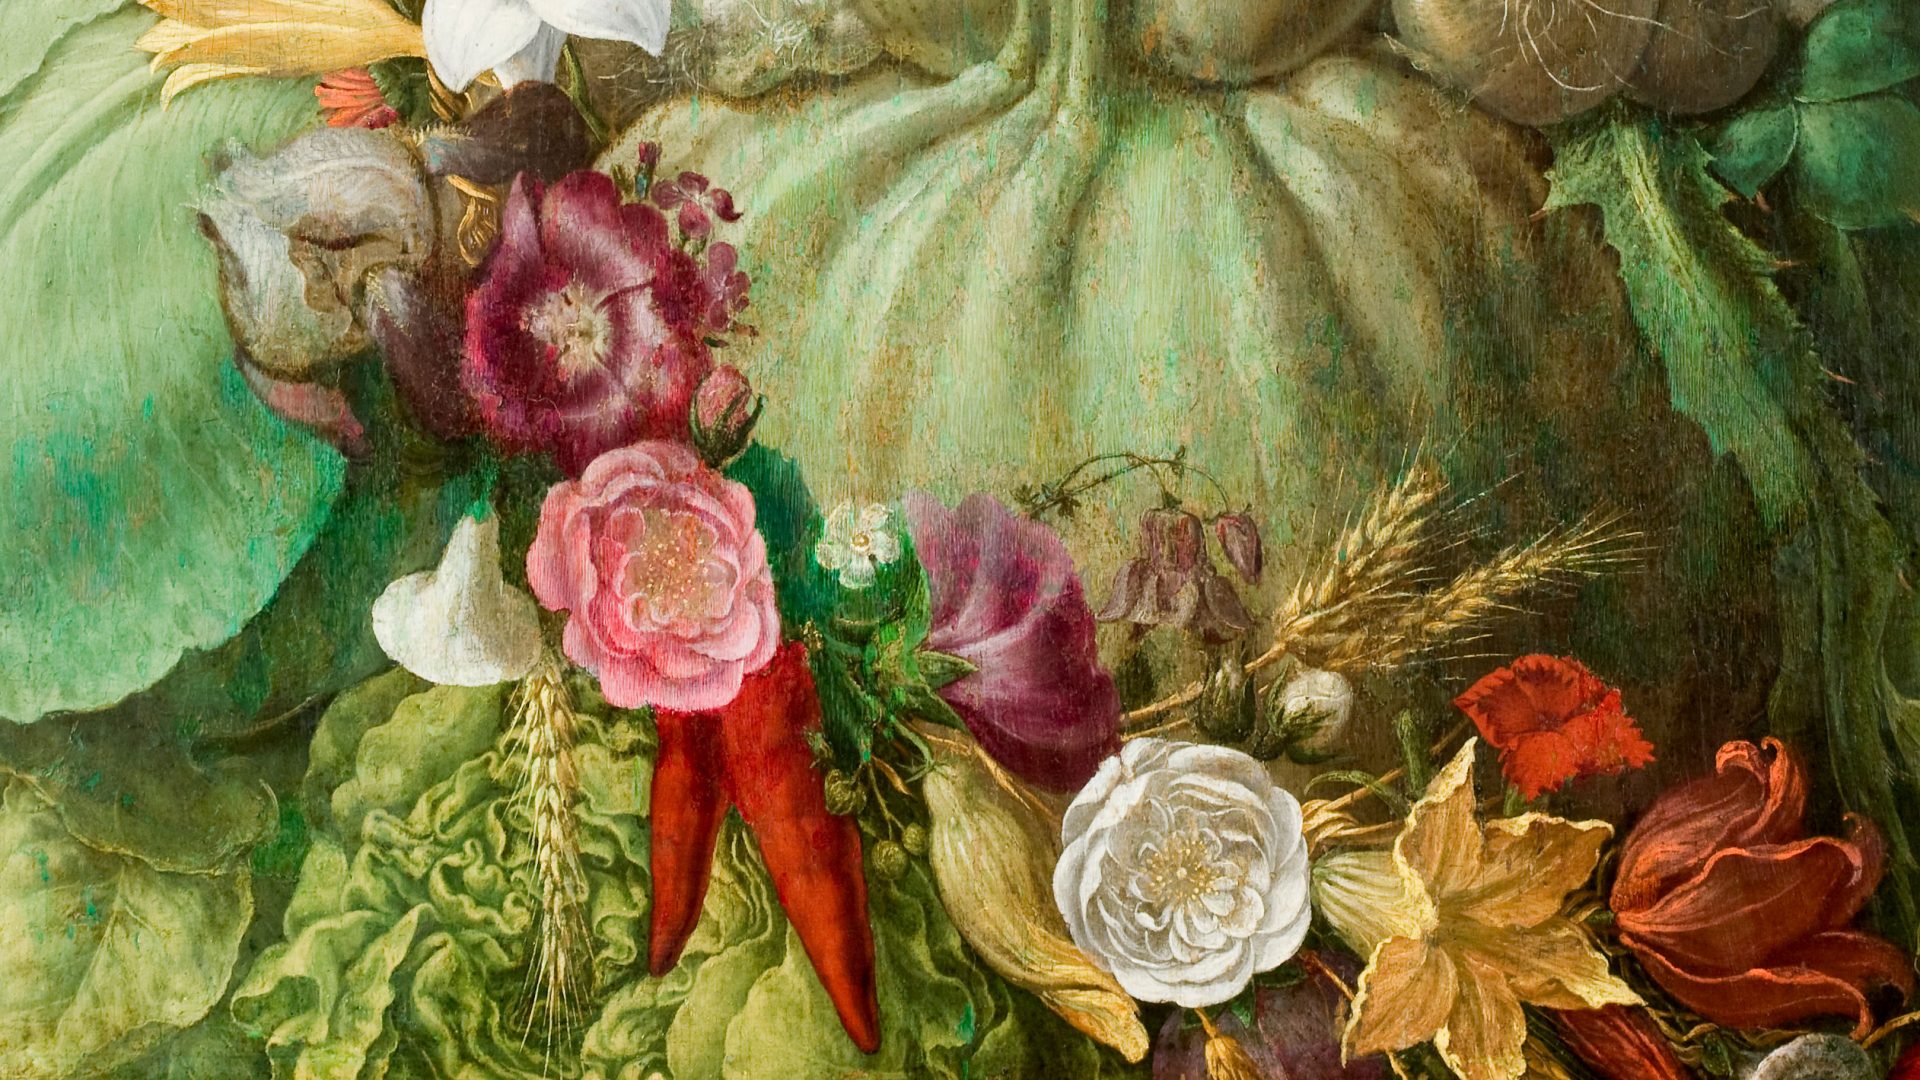 Details of flowers from the artwork Vertumnus.